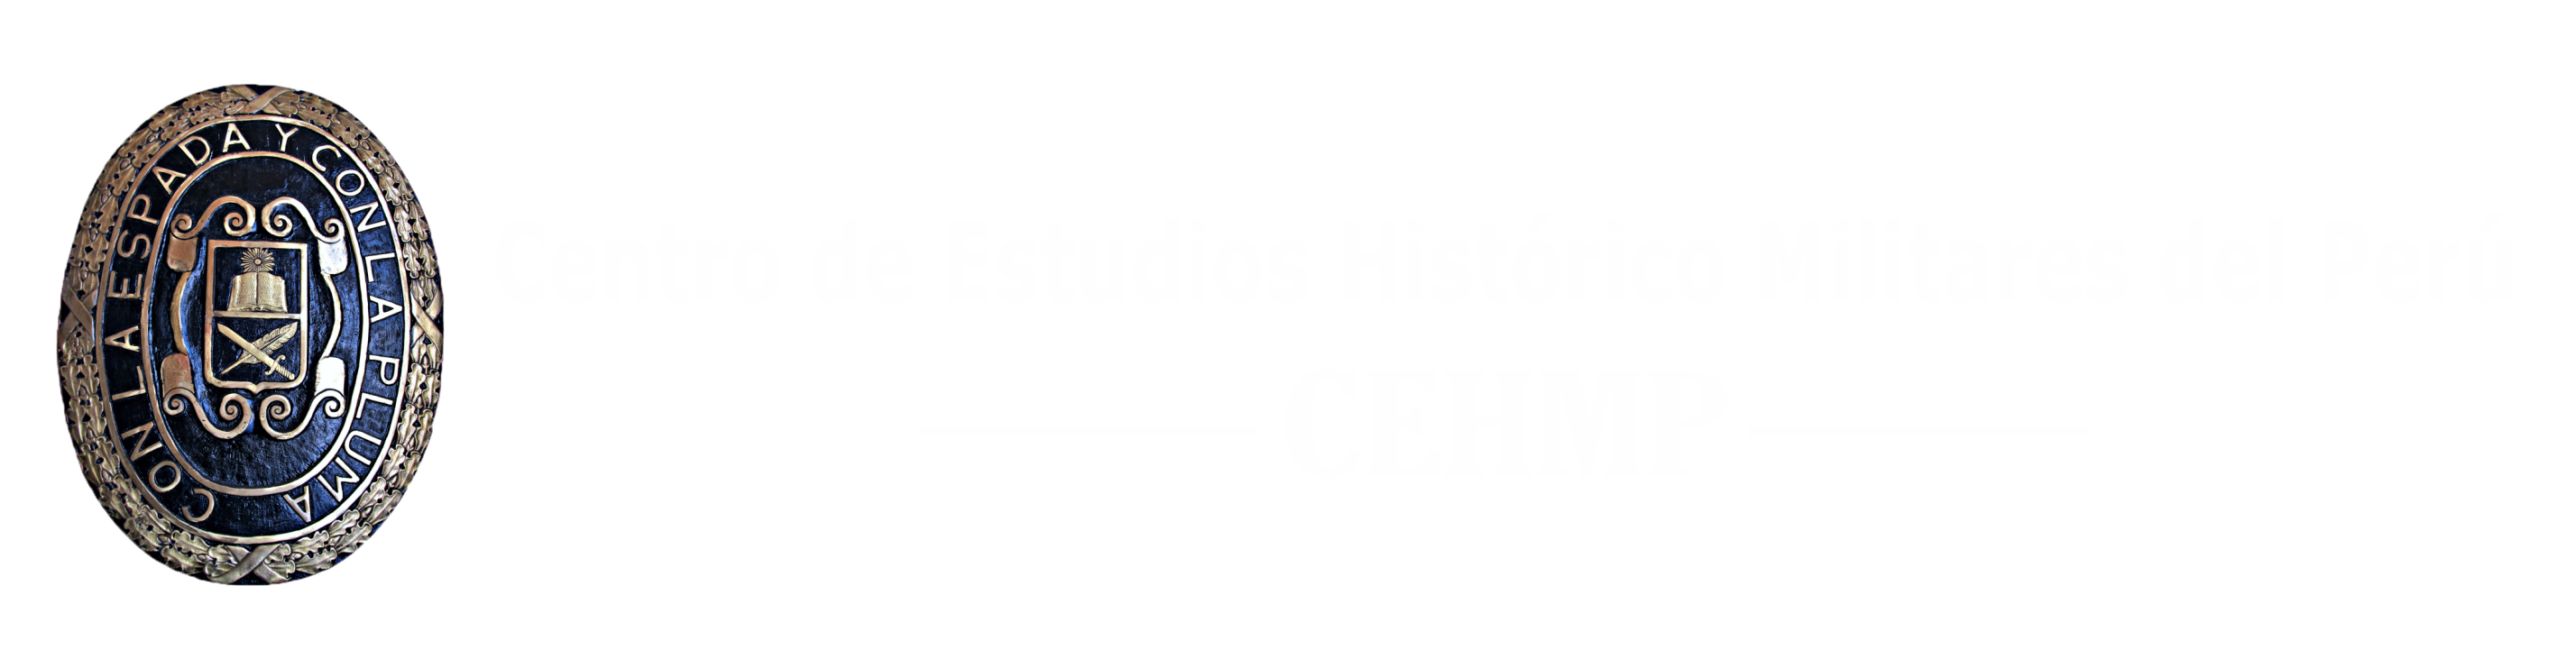 Centro de Estudios Histórico Militares del Perú